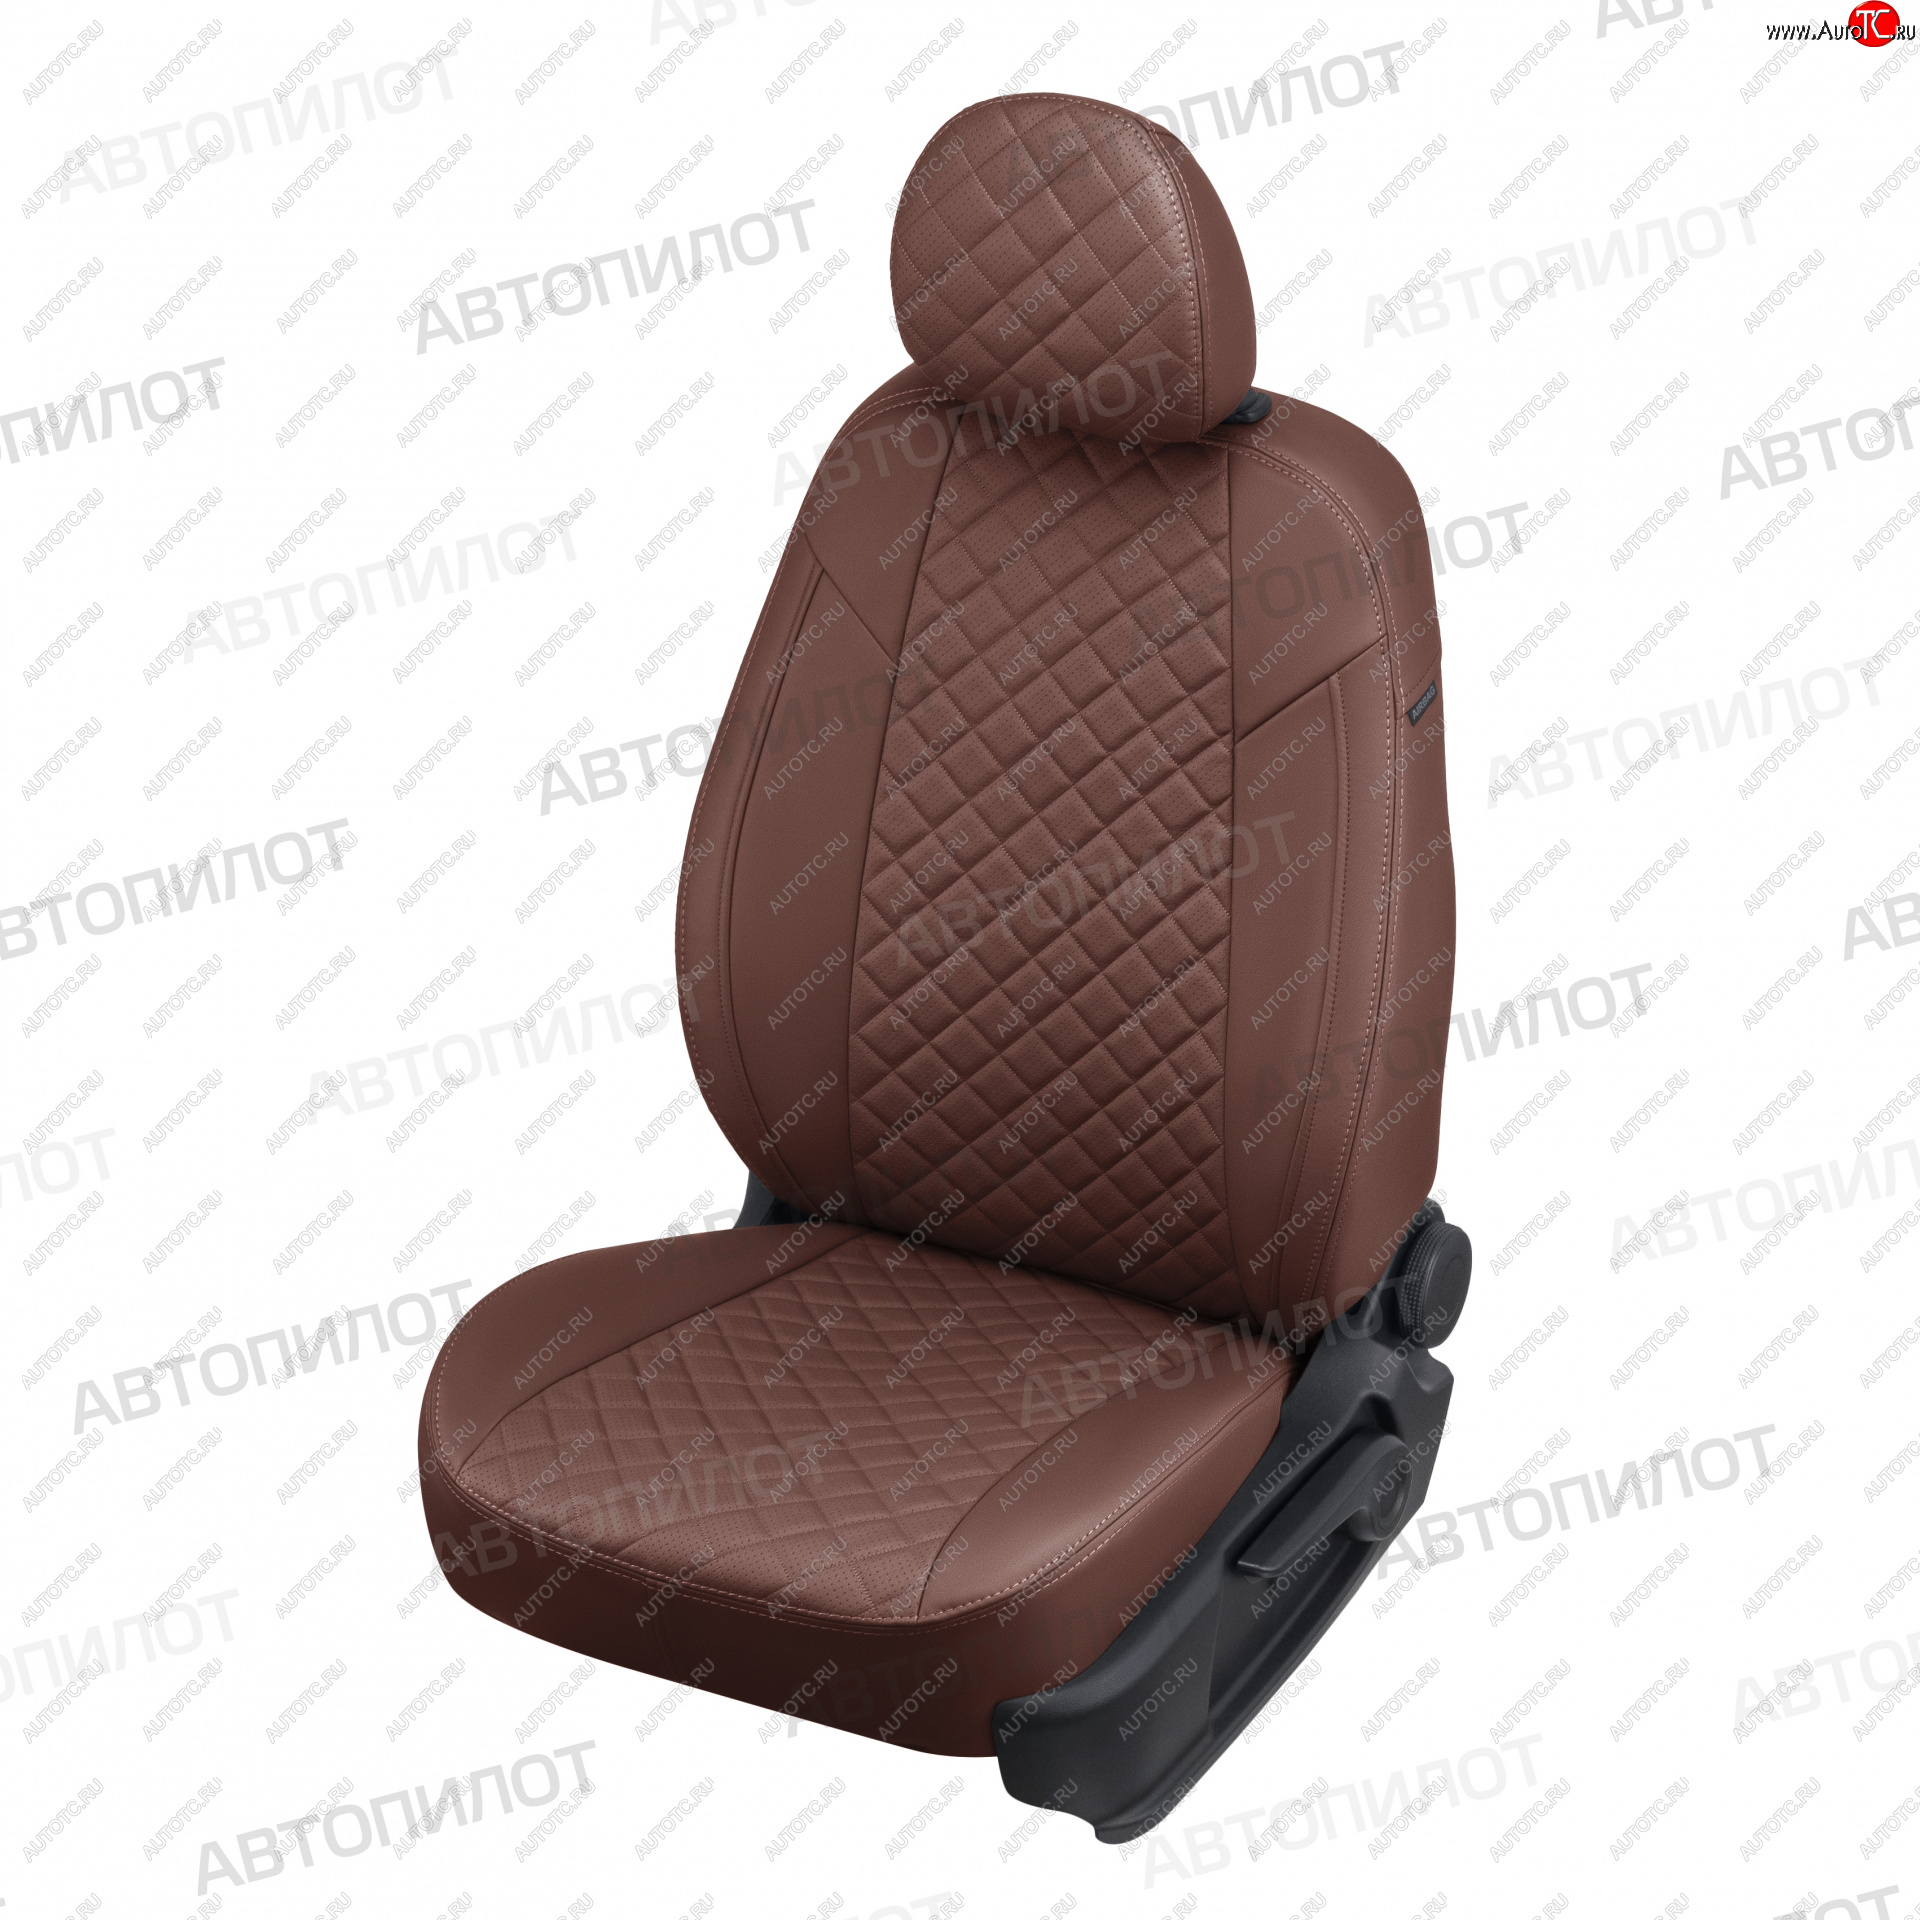 13 999 р. Чехлы сидений (экокожа) Автопилот Ромб  KIA Soul  1 AM (2008-2014) (темно-коричневый)